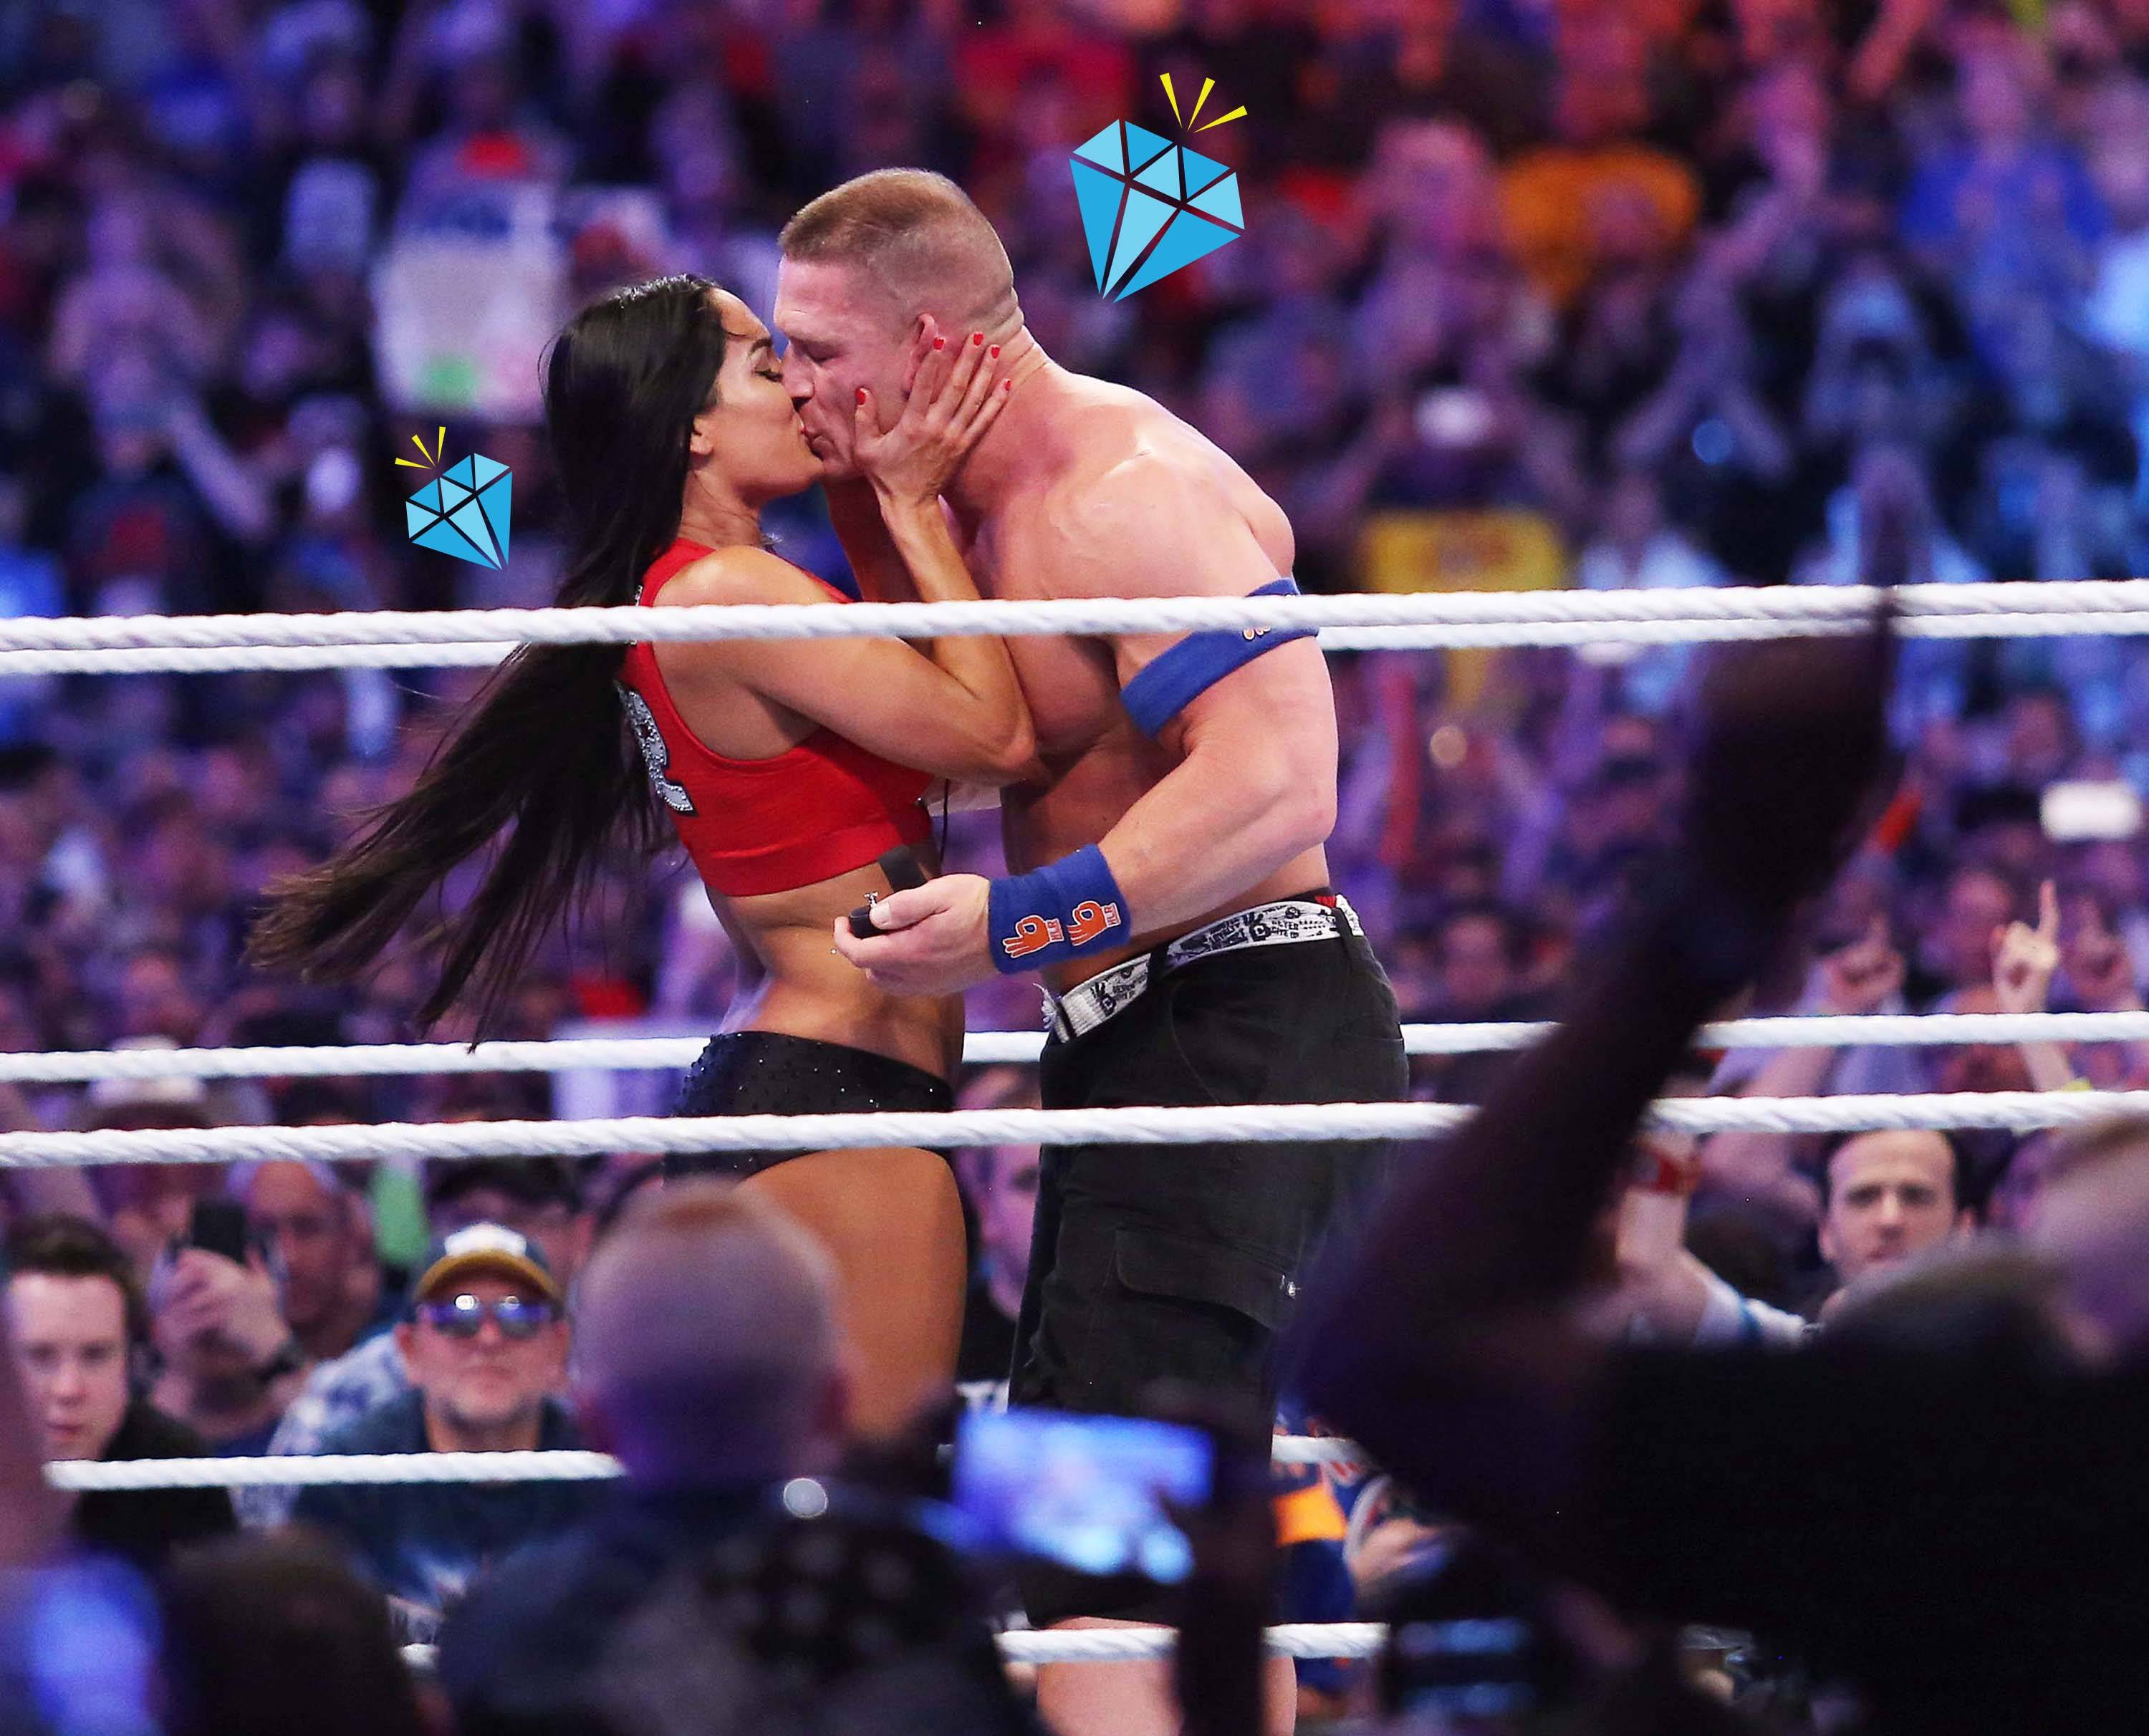 Wwe Nikki Sex - WrestleMania 33' Included John Cena Proposing to Nikki Bella | News | BET